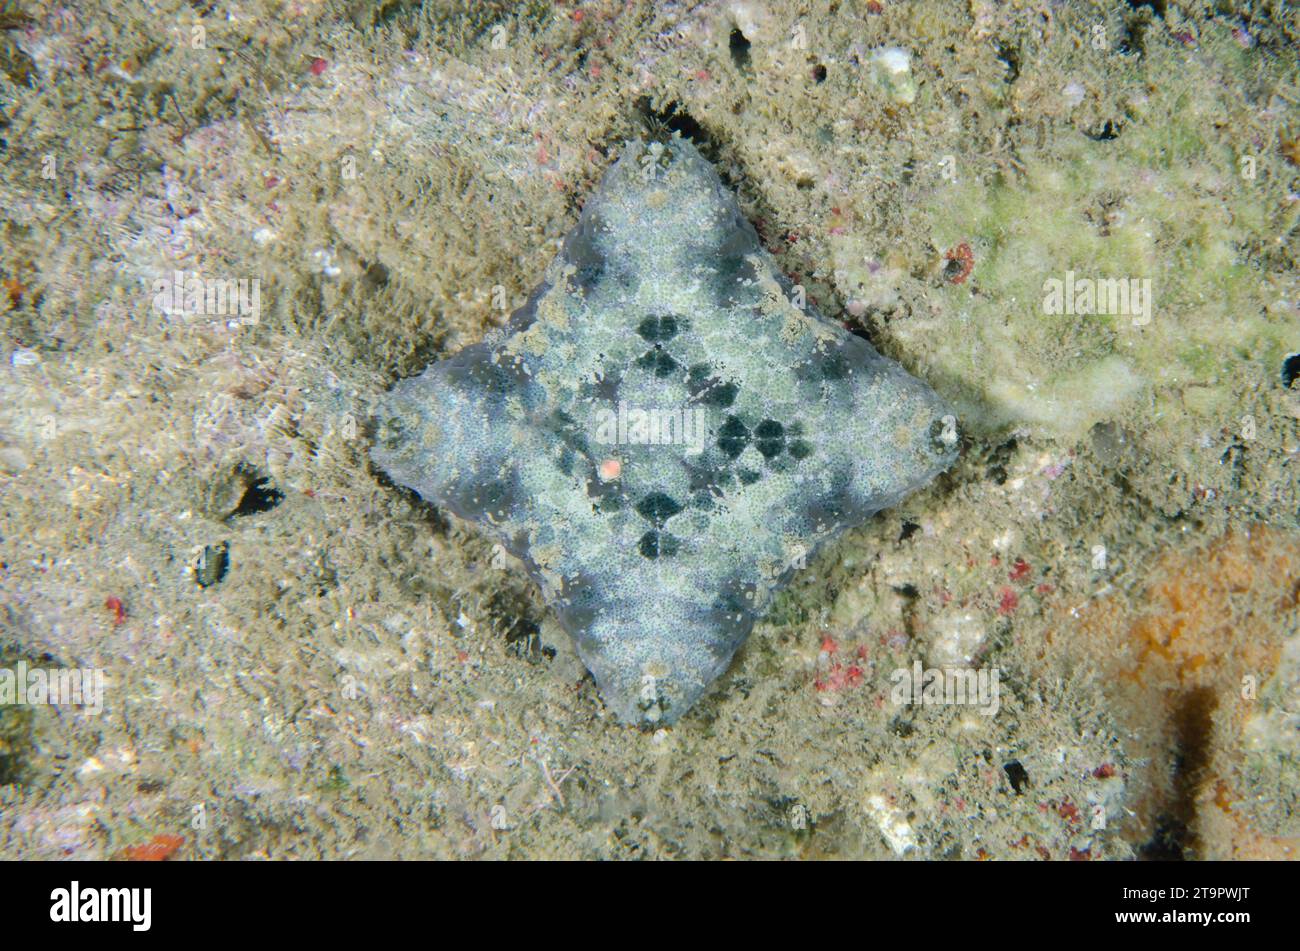 Immature Cushion Star, Culcita novaeguineae, aberrant as only 4 arms, Laha dive site, Ambon, Maluku, Indonesia, Banda Sea Stock Photo